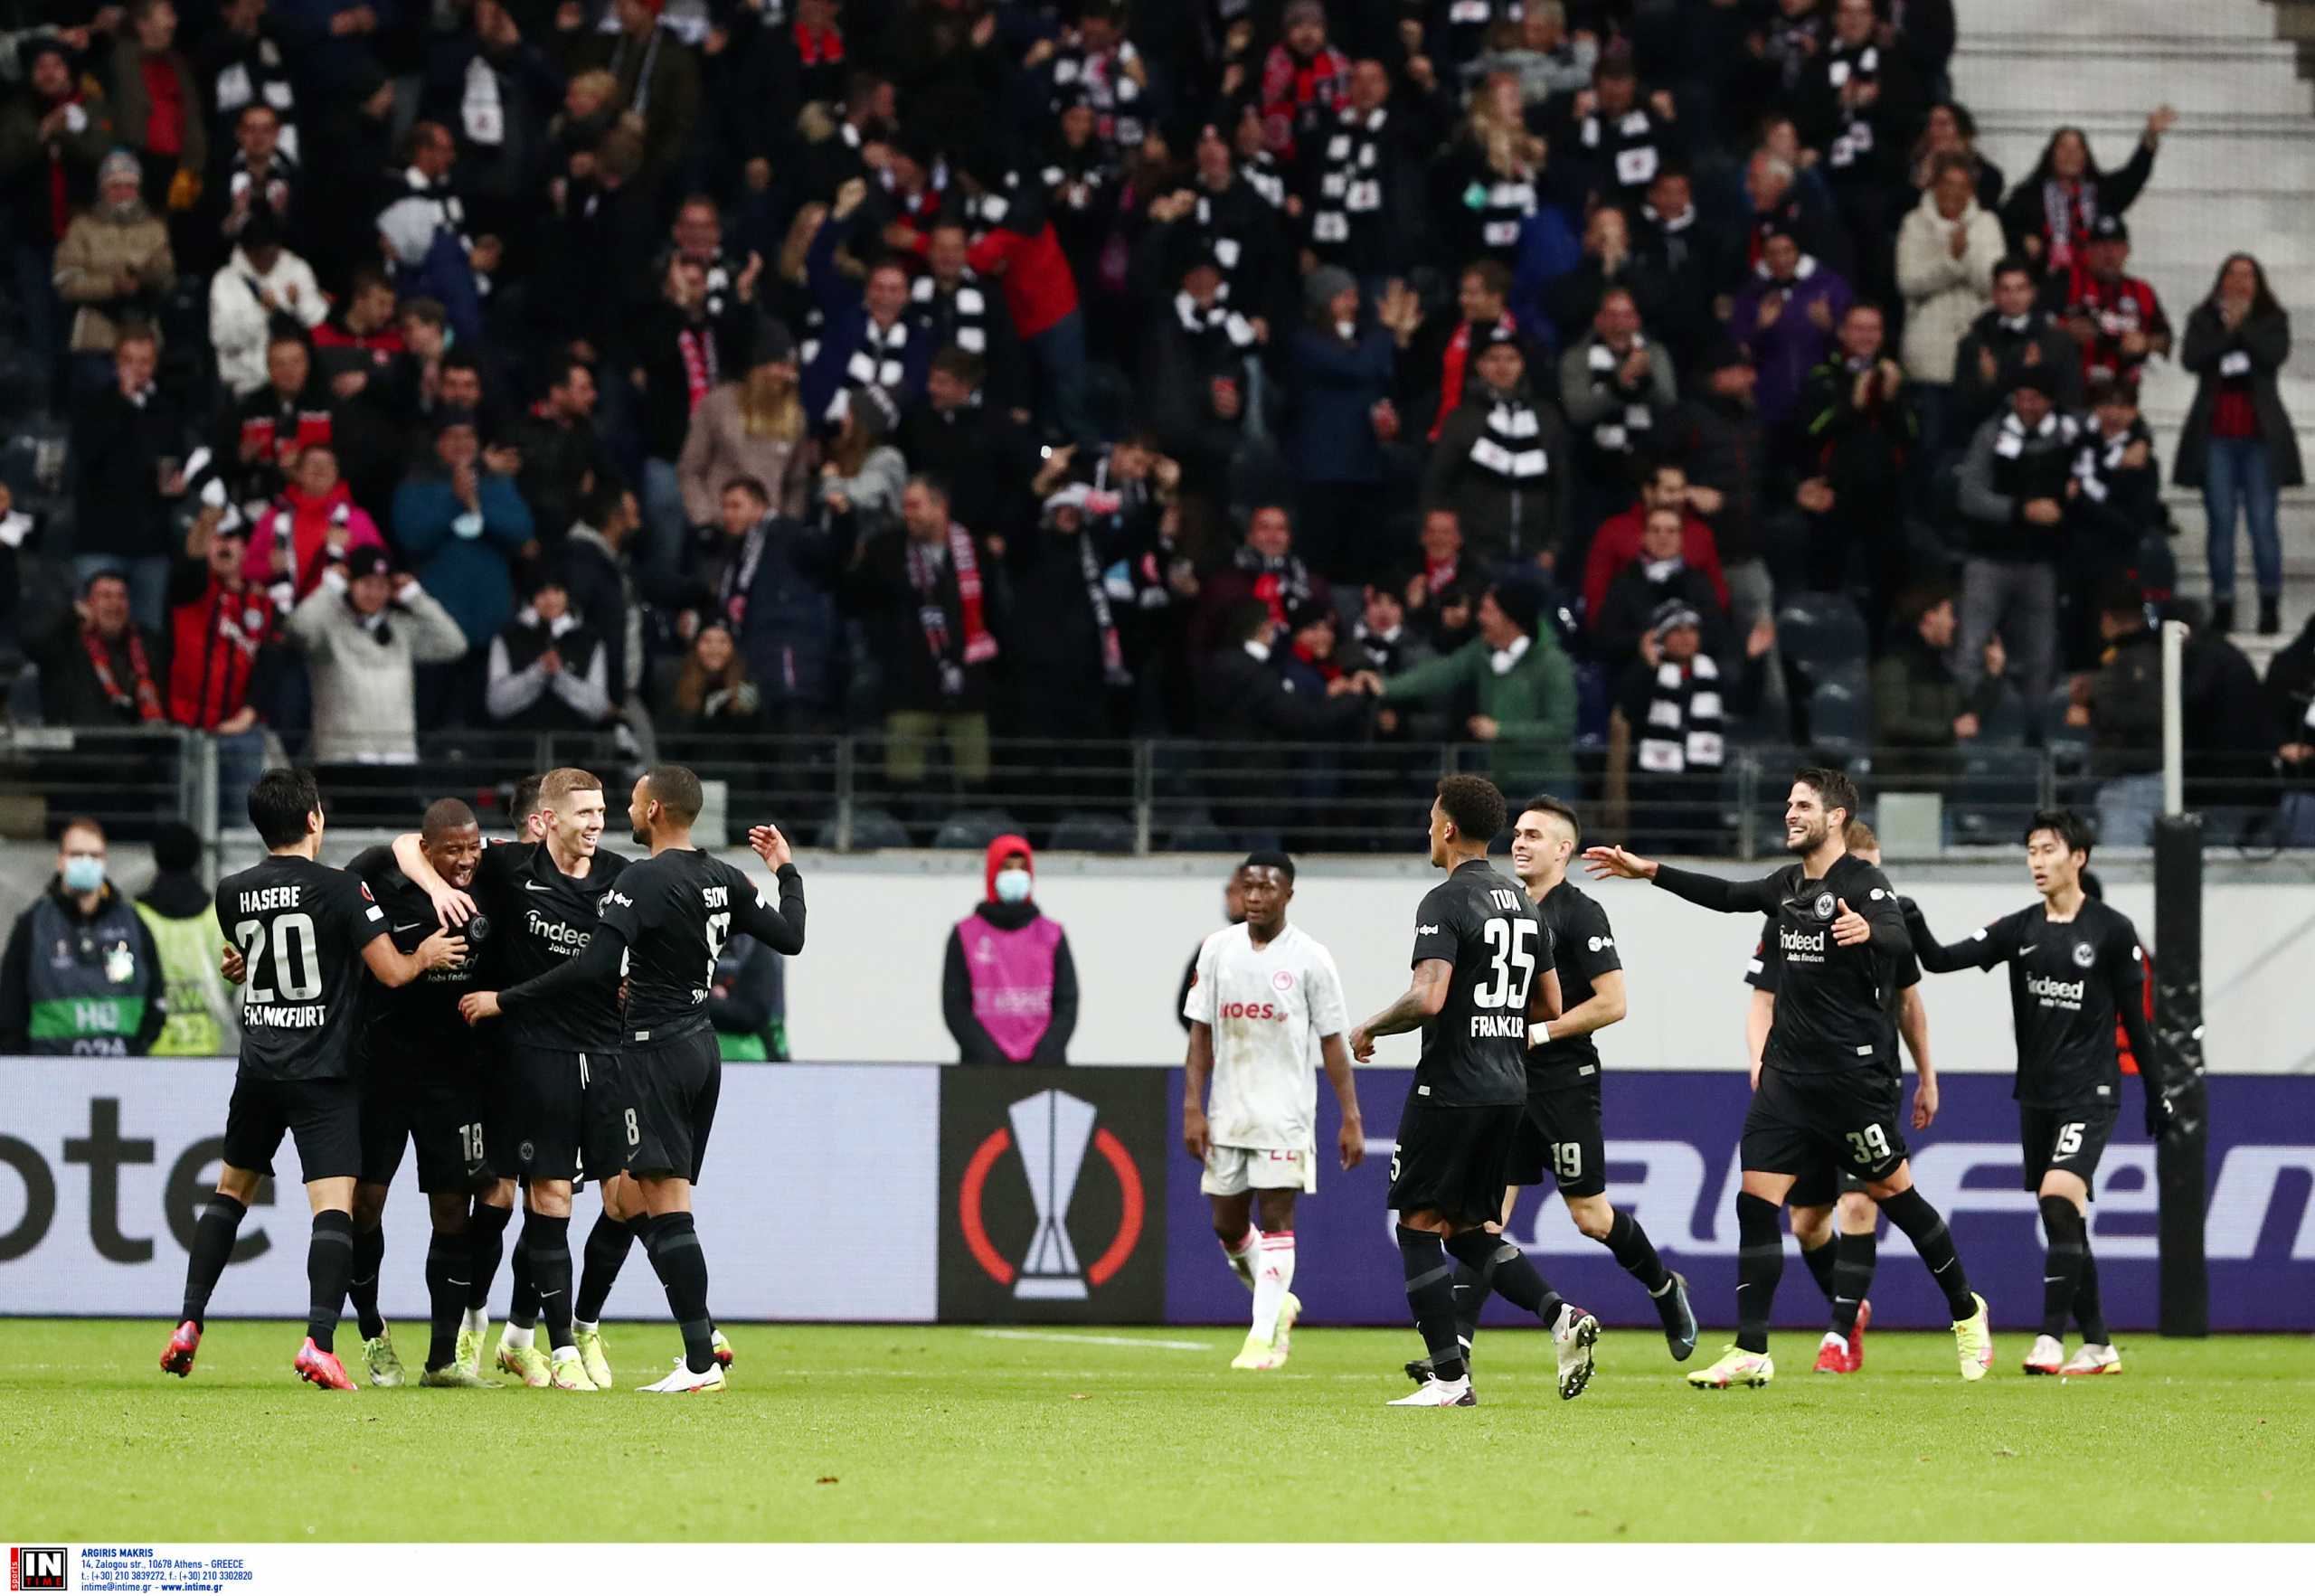 Europa League, Άιντραχτ Φρανκφούρτης – Ολυμπιακός 3-1: Έχασε το ματς και την πρώτη θέση η ομάδα του Πέδρο Μαρτίνς